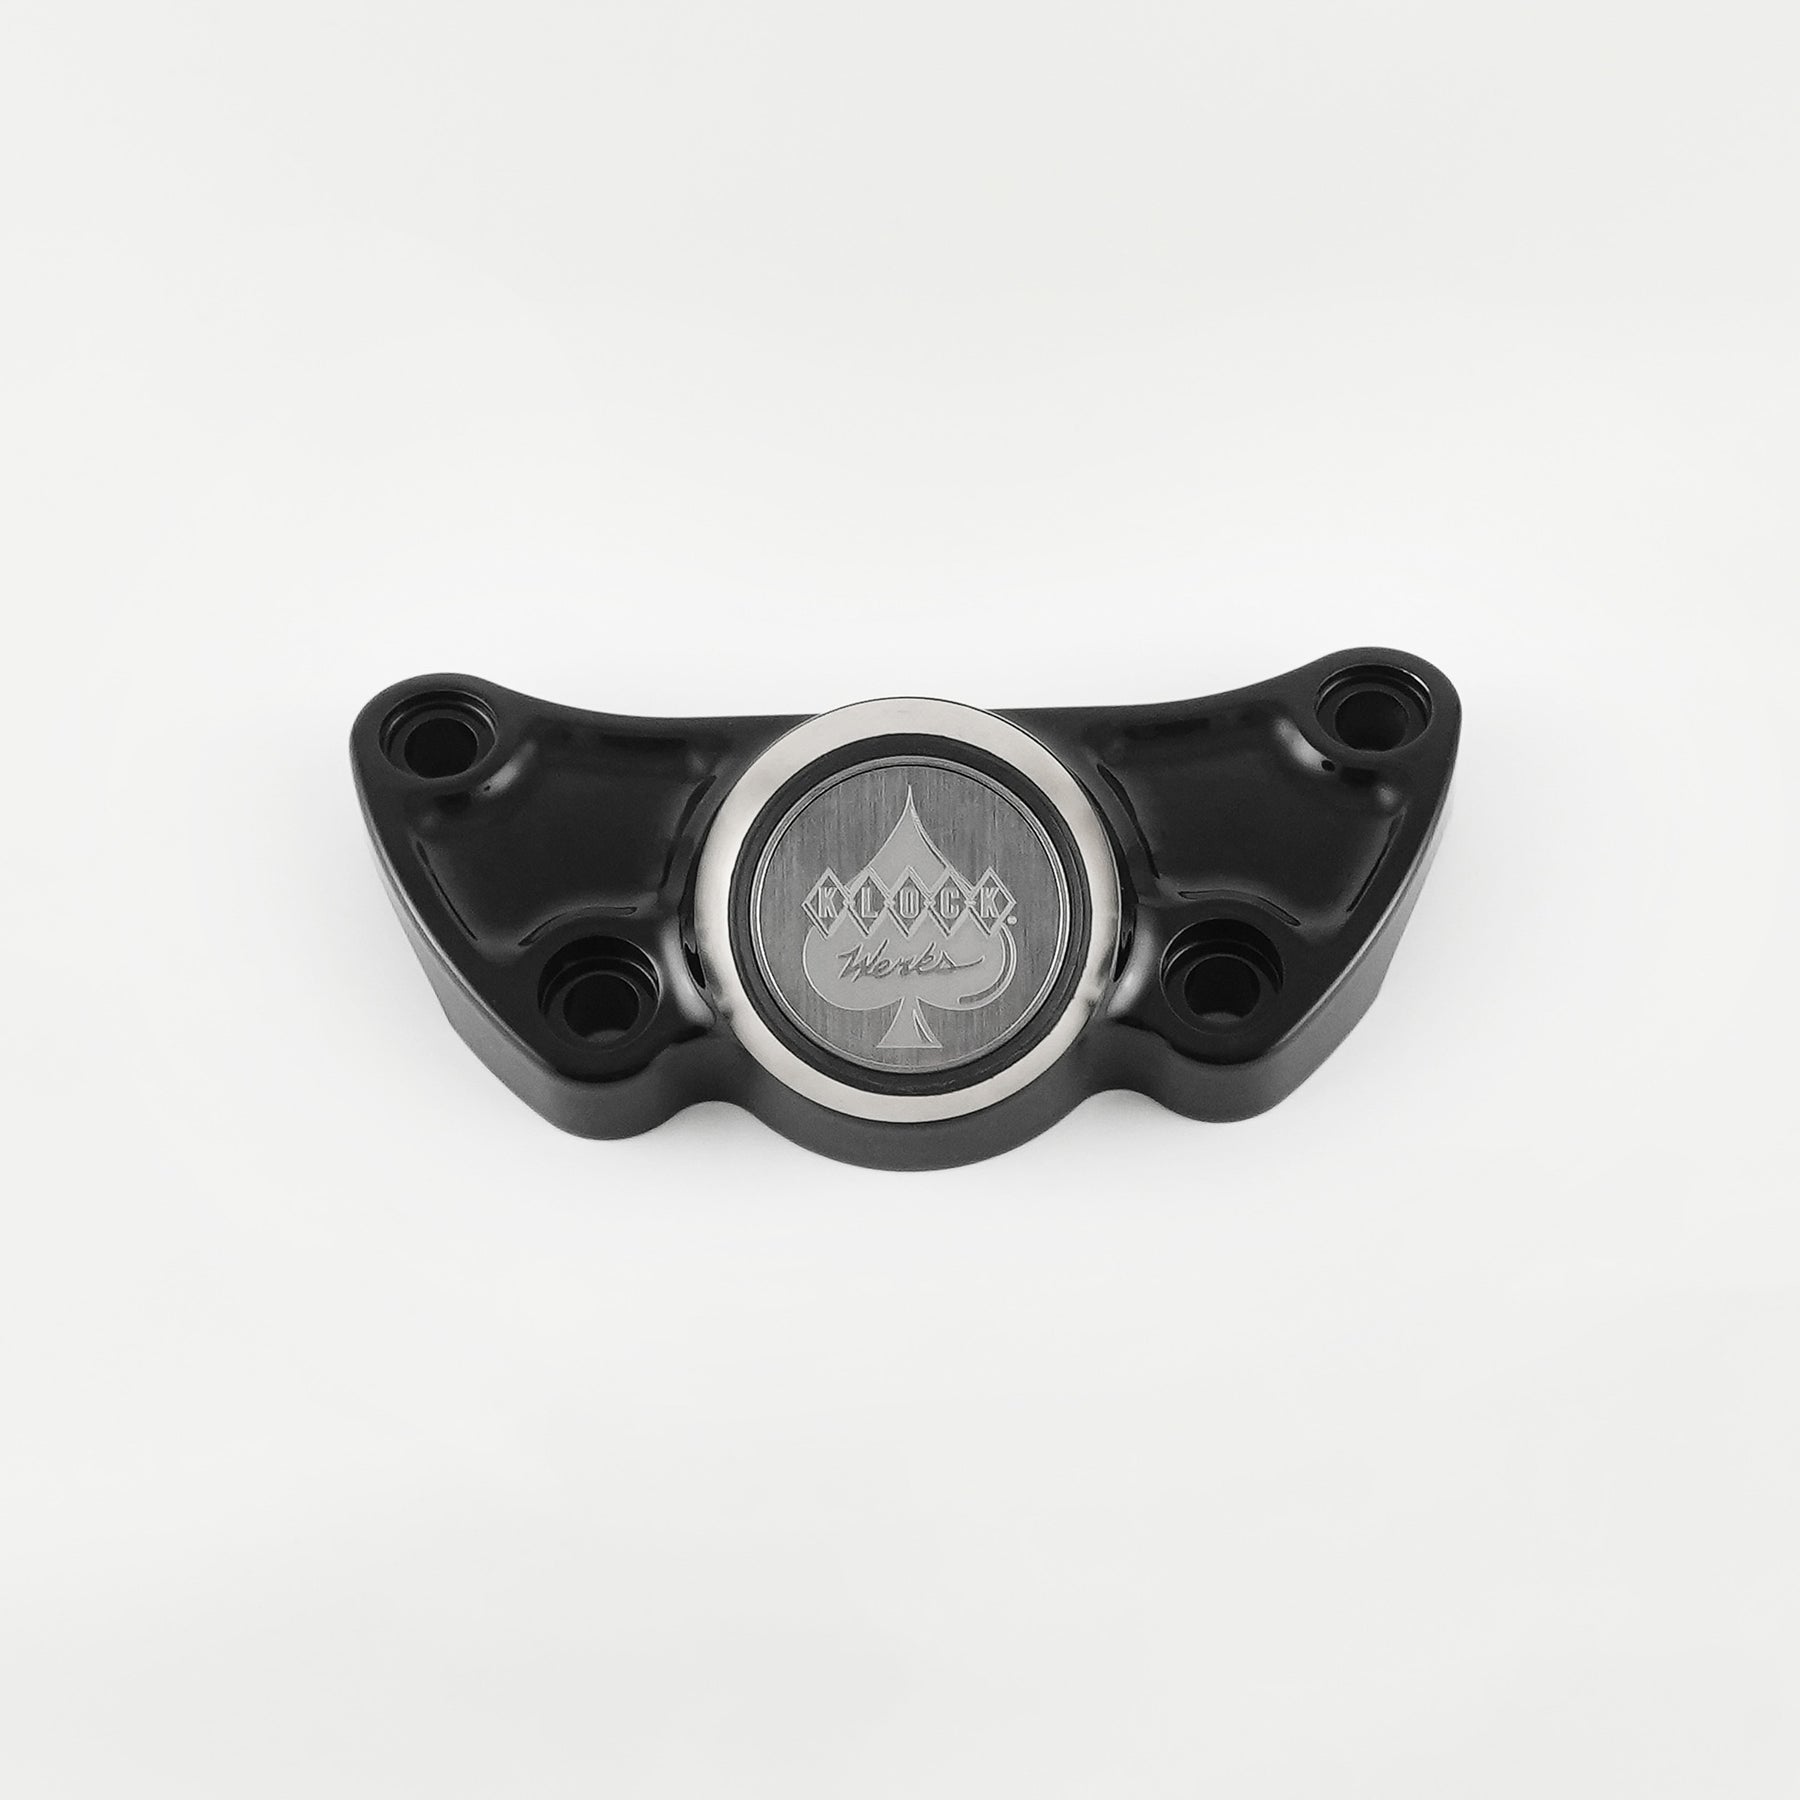 Black Center Riser Magnetic Phone Mount for Harley Davidson Motorcycles